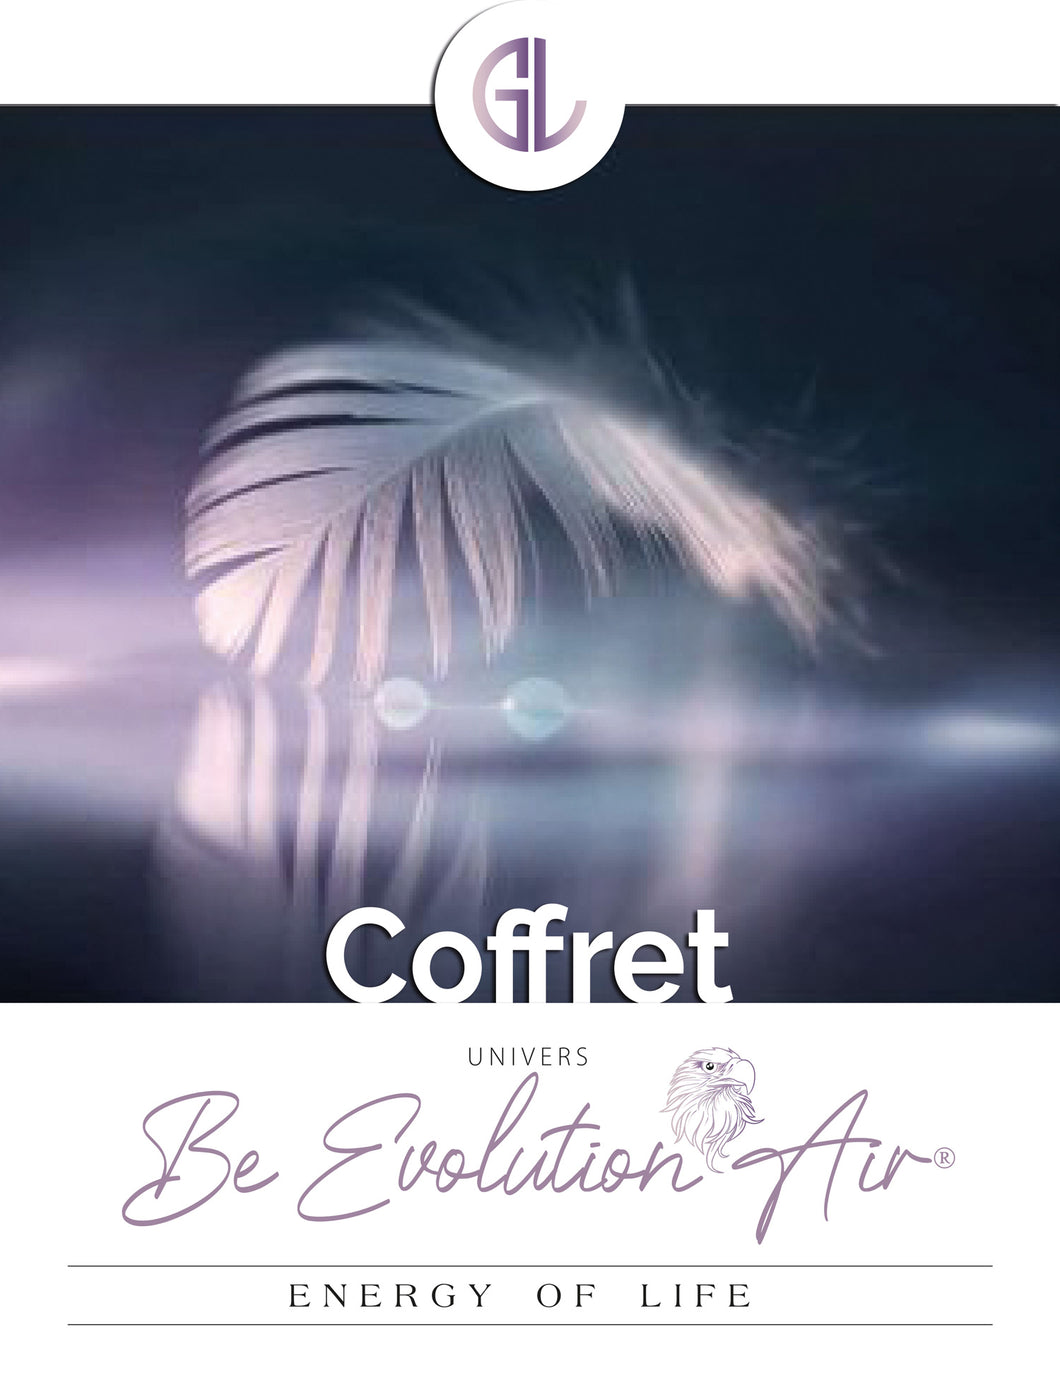 COFFRET « Be Evolution Air®»